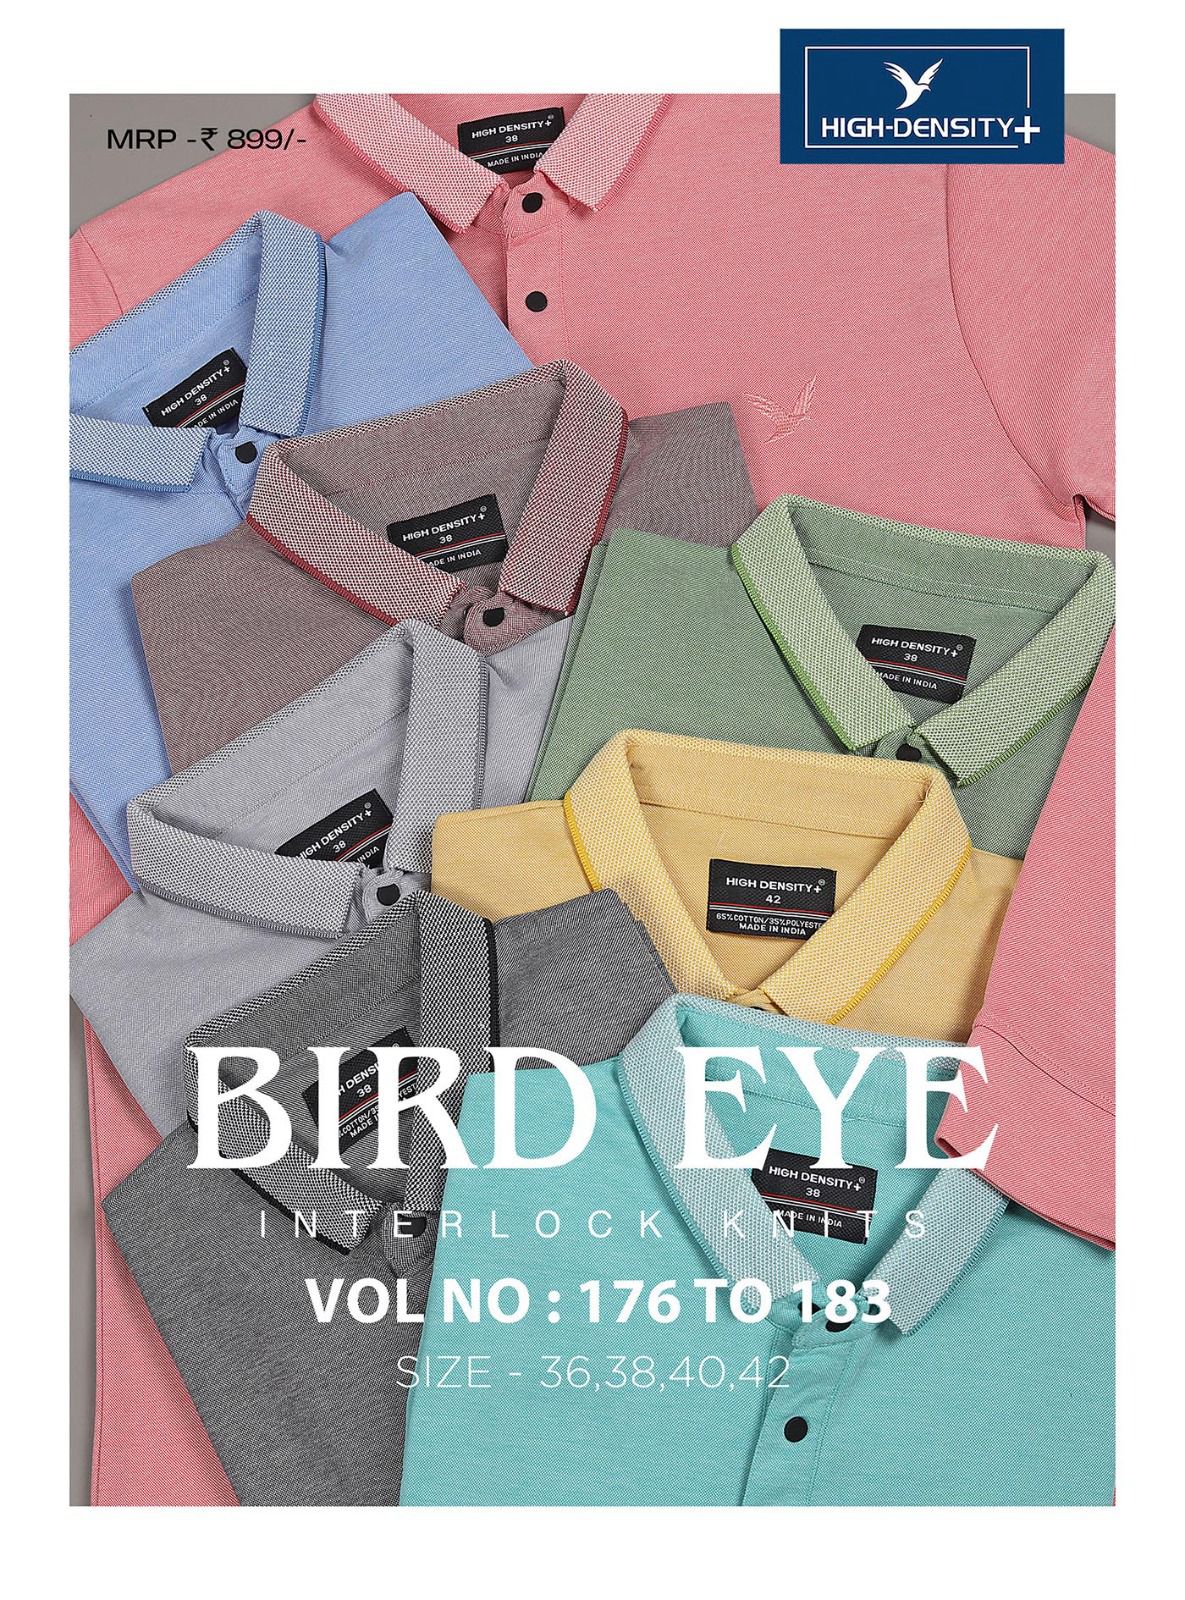 176-183 High Density Bird Eye Mens Tshirts Supplier